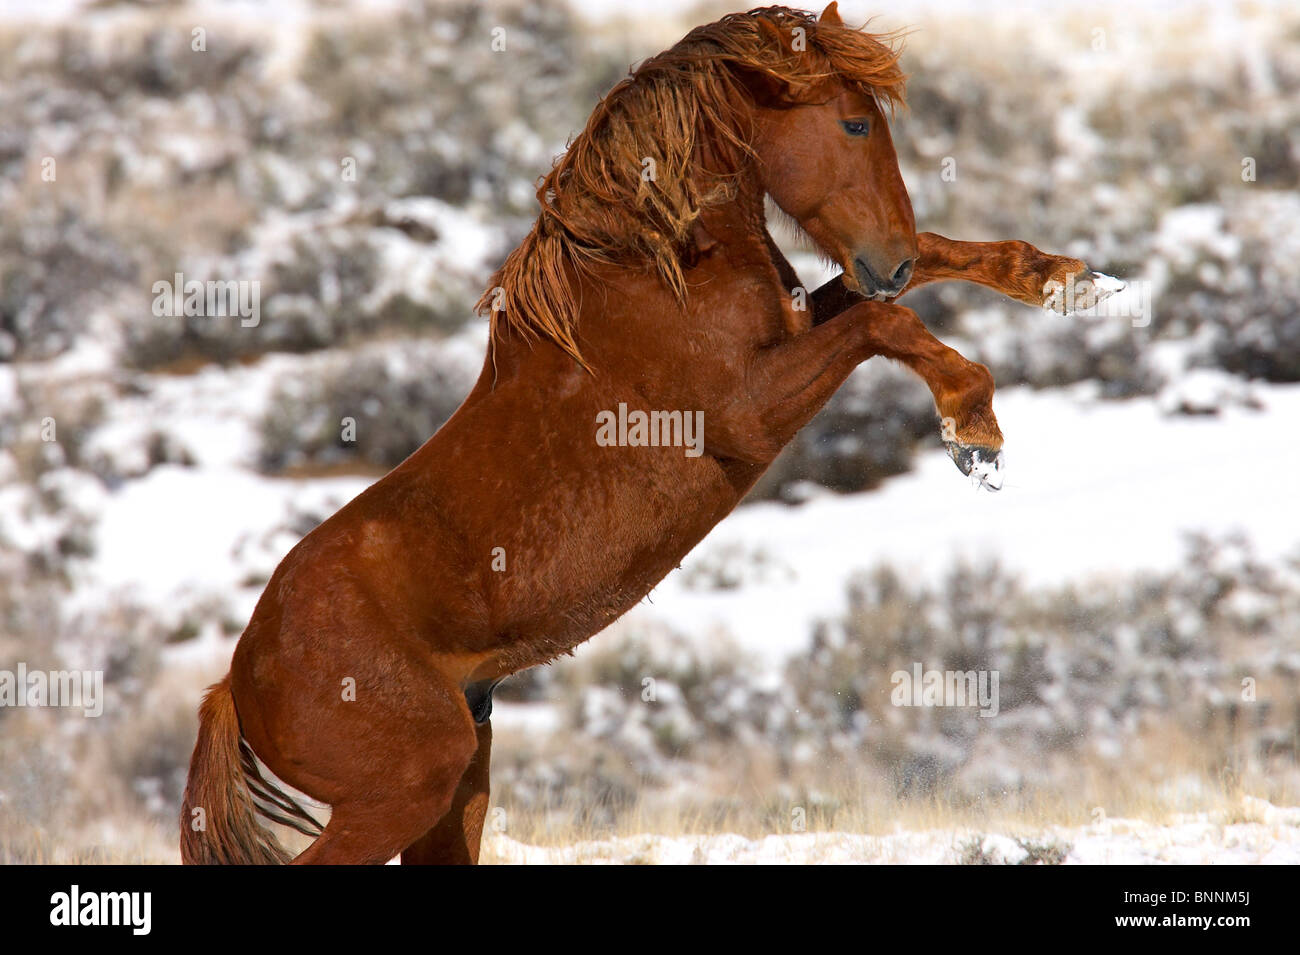 Feral Horse, Equus ferus, Wild horse rearing up Stock Photo